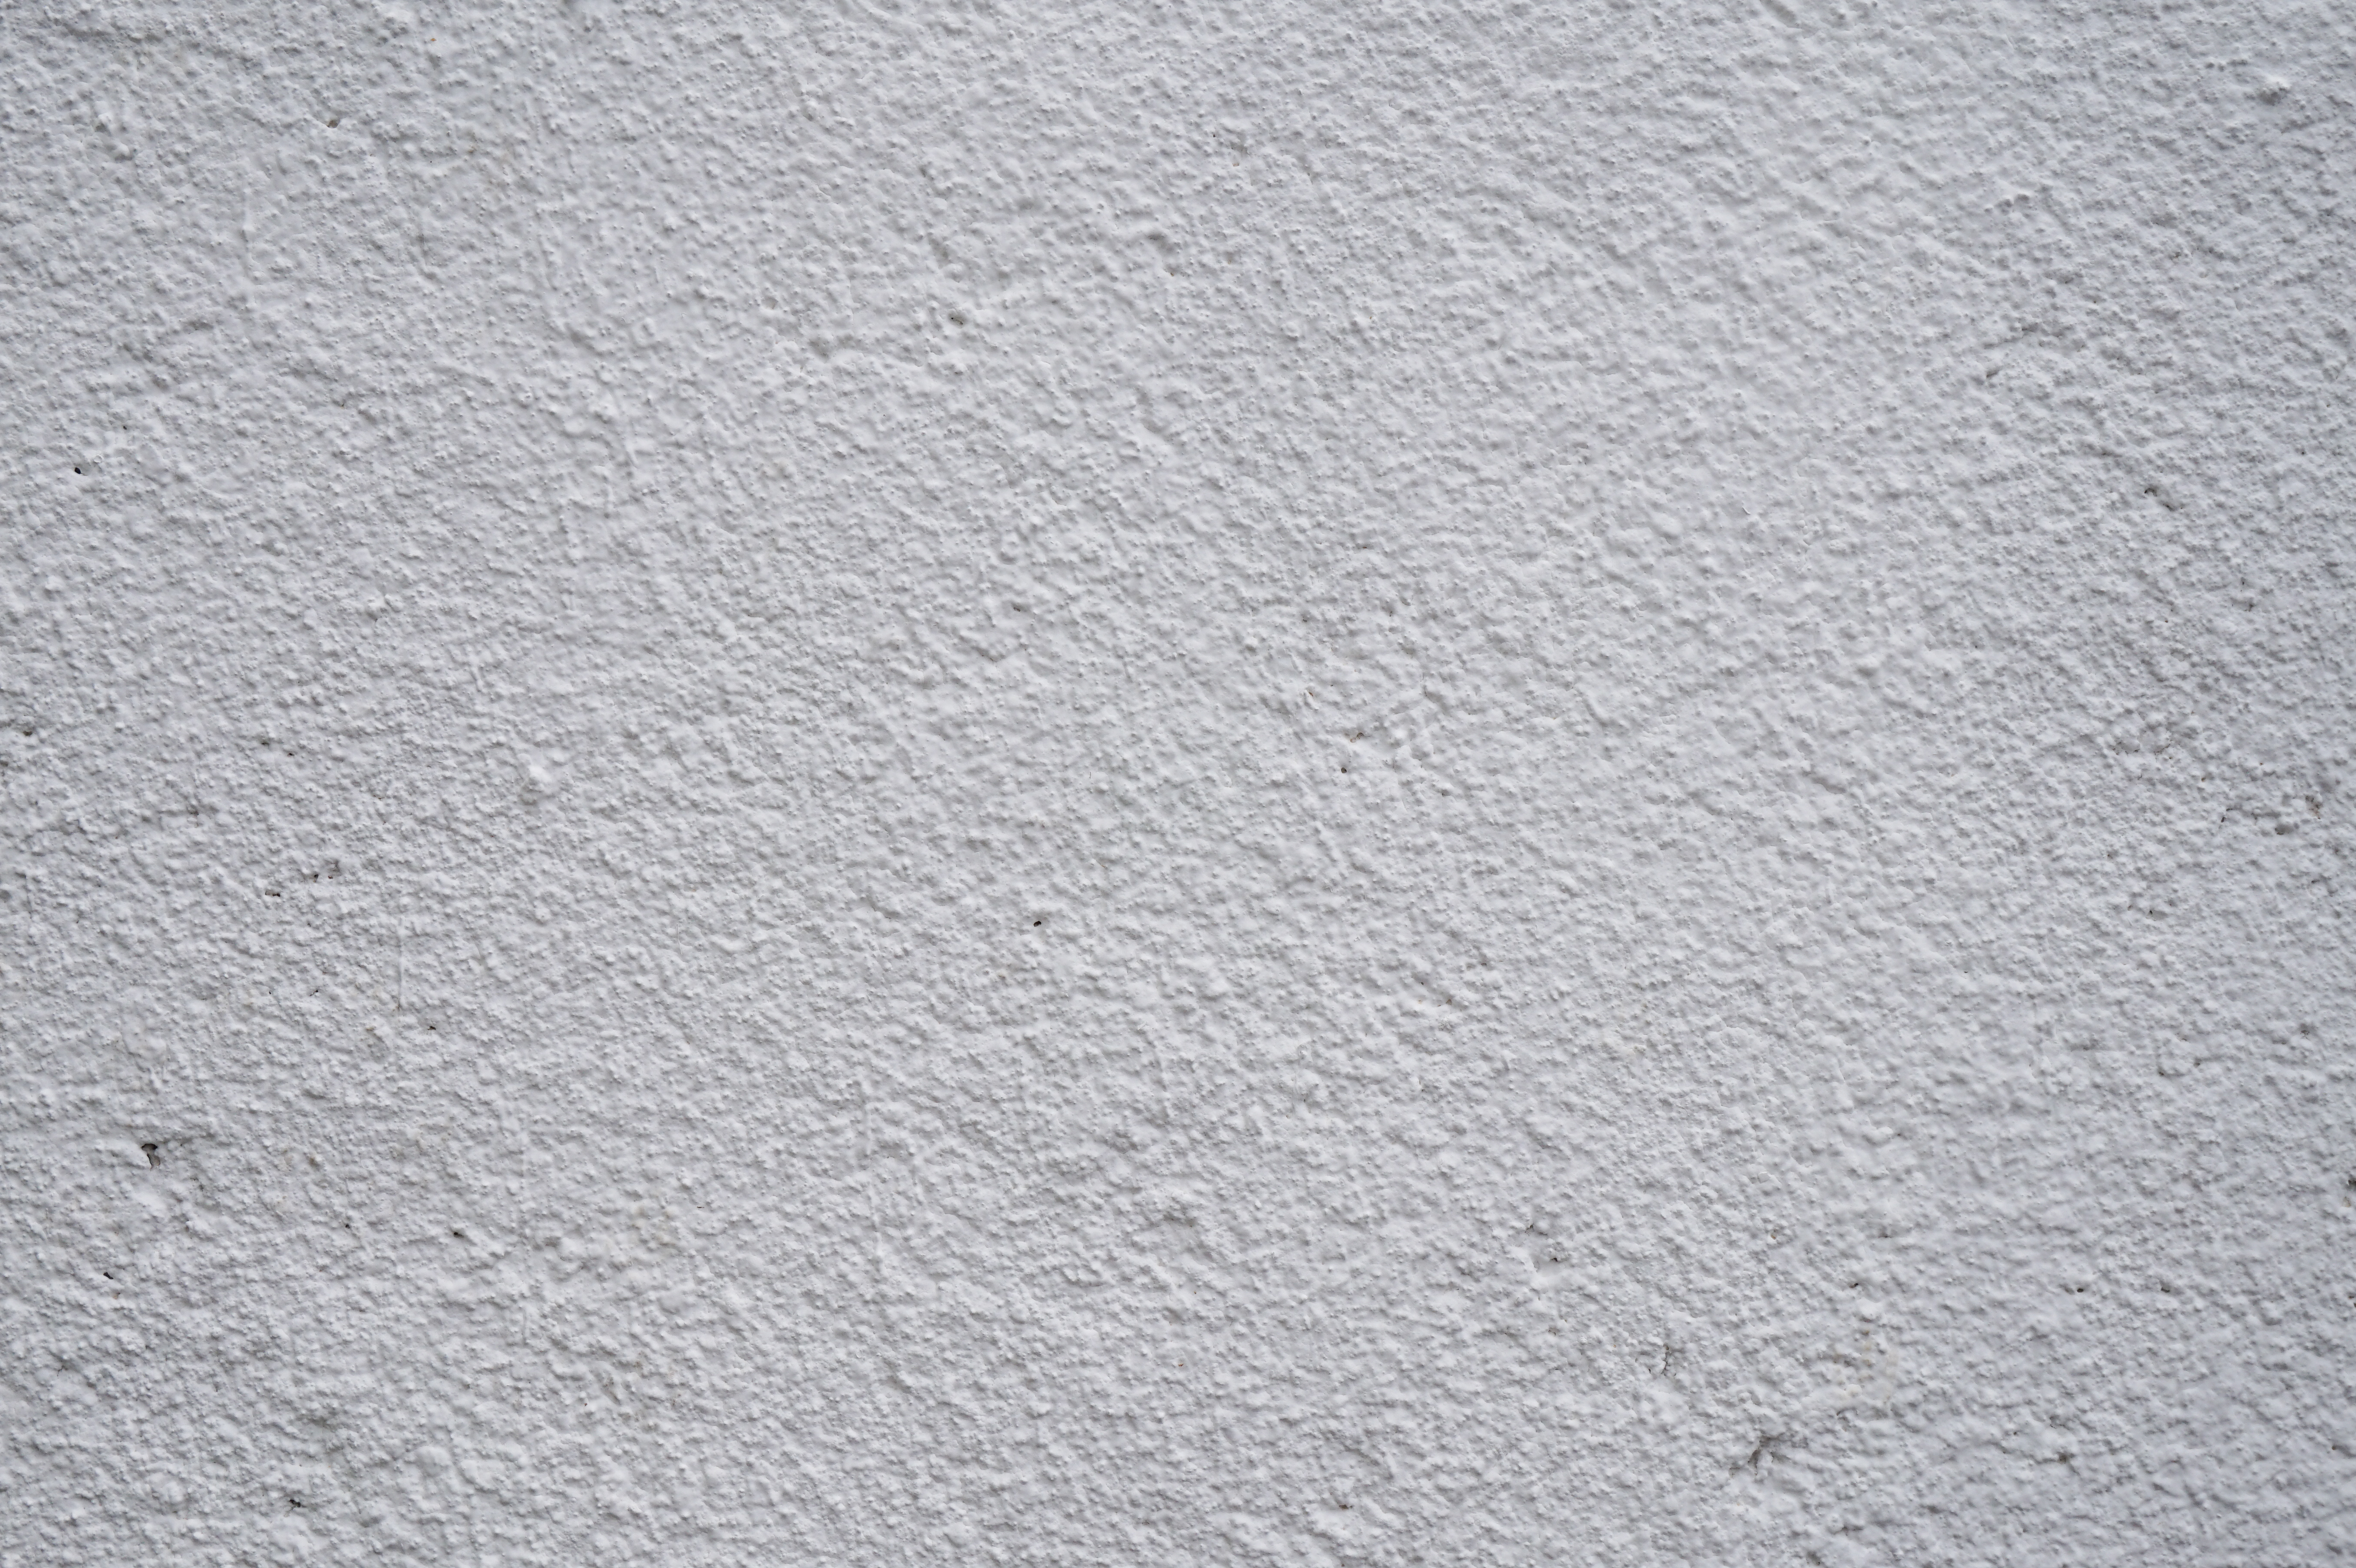 Painted concrete wall - Concrete - Texturify - Free textures